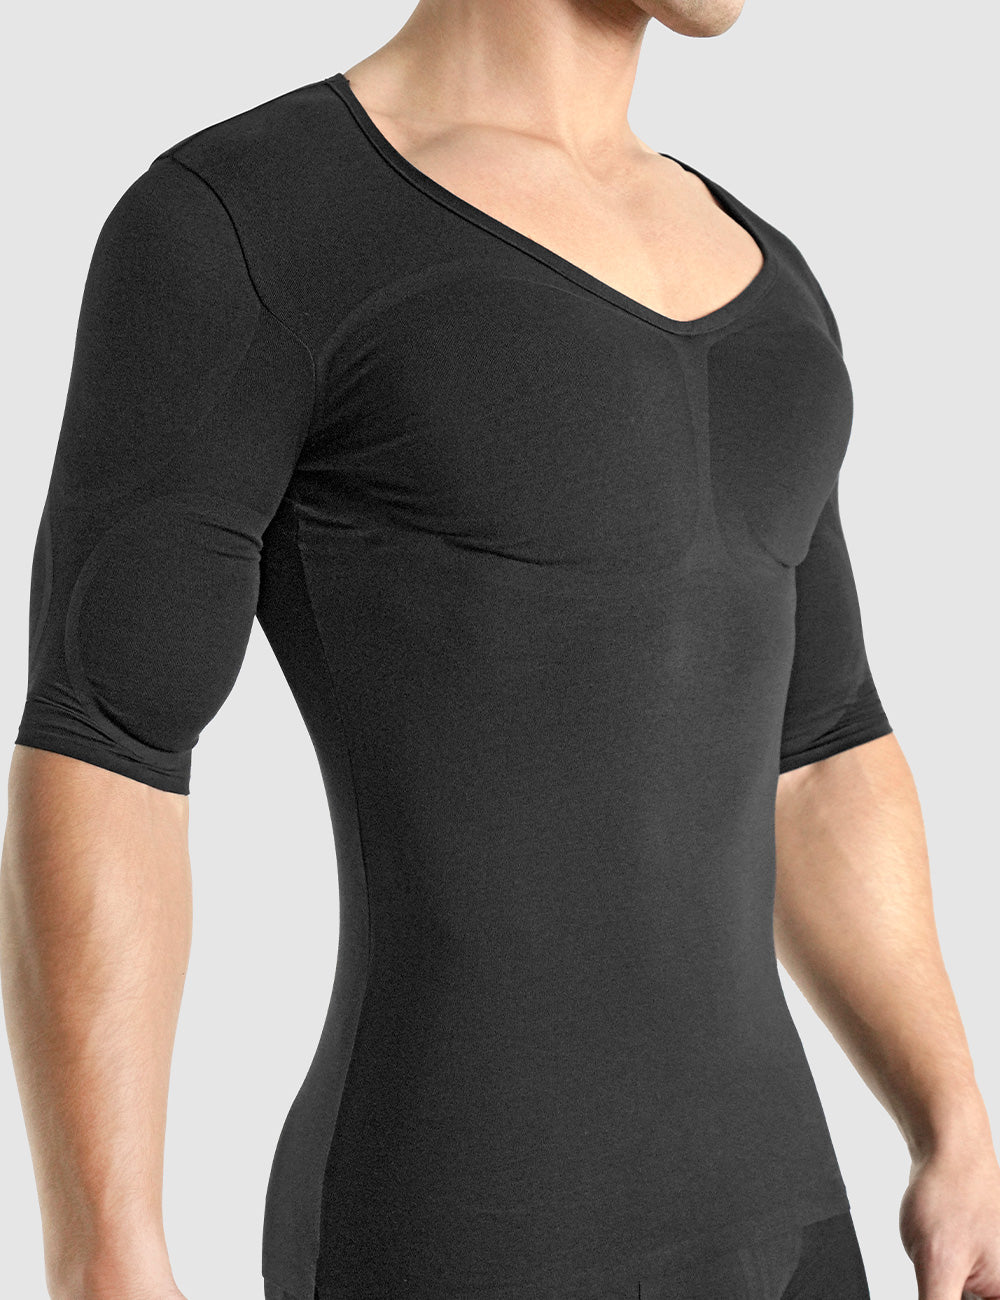 Rounderbum Men's Padded Muscle Shirt - Black